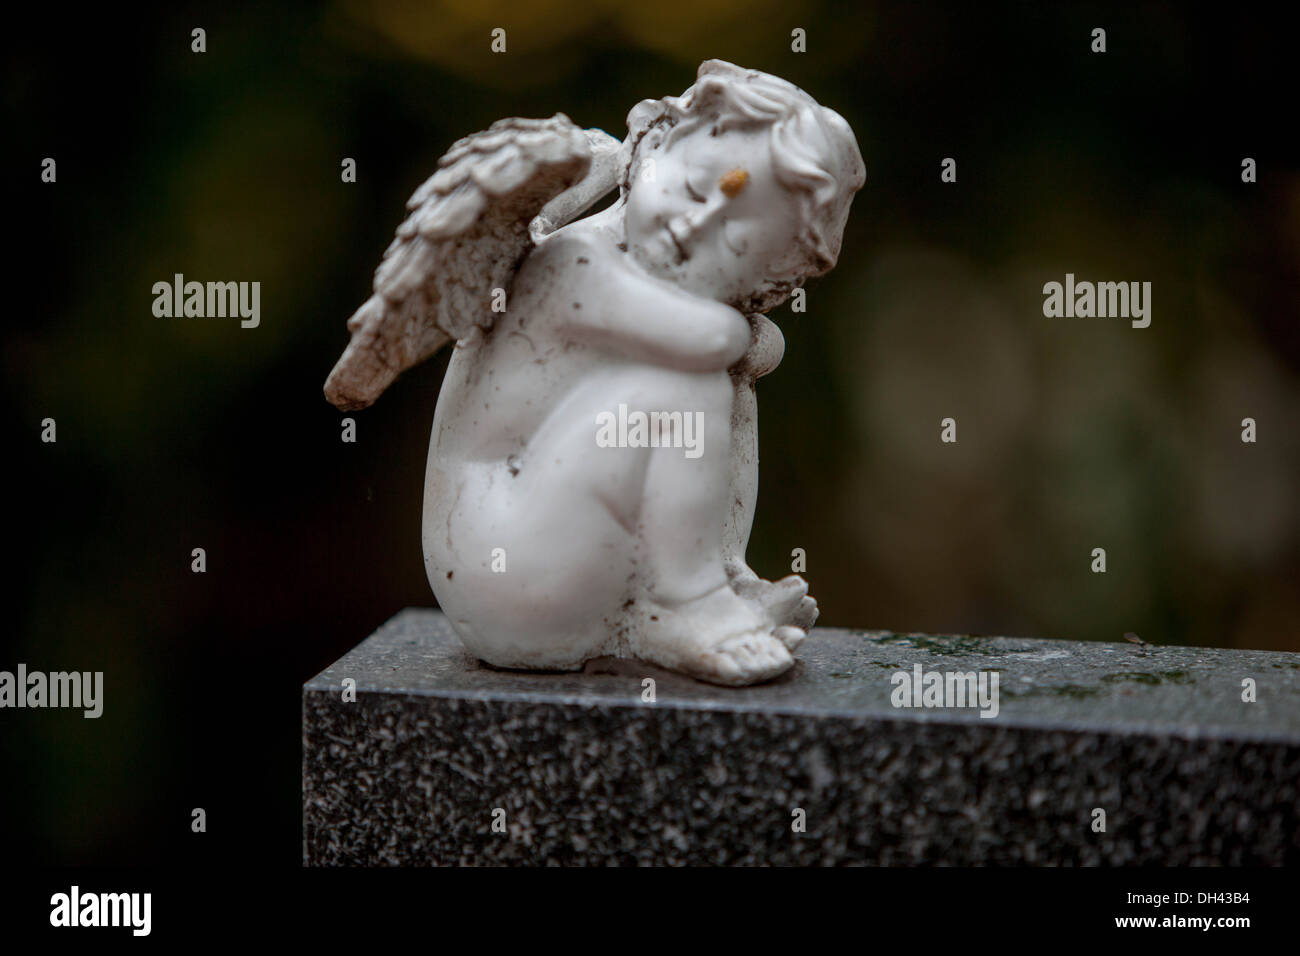 Cemetery Angel figure on a grave Czech Republic Stock Photo